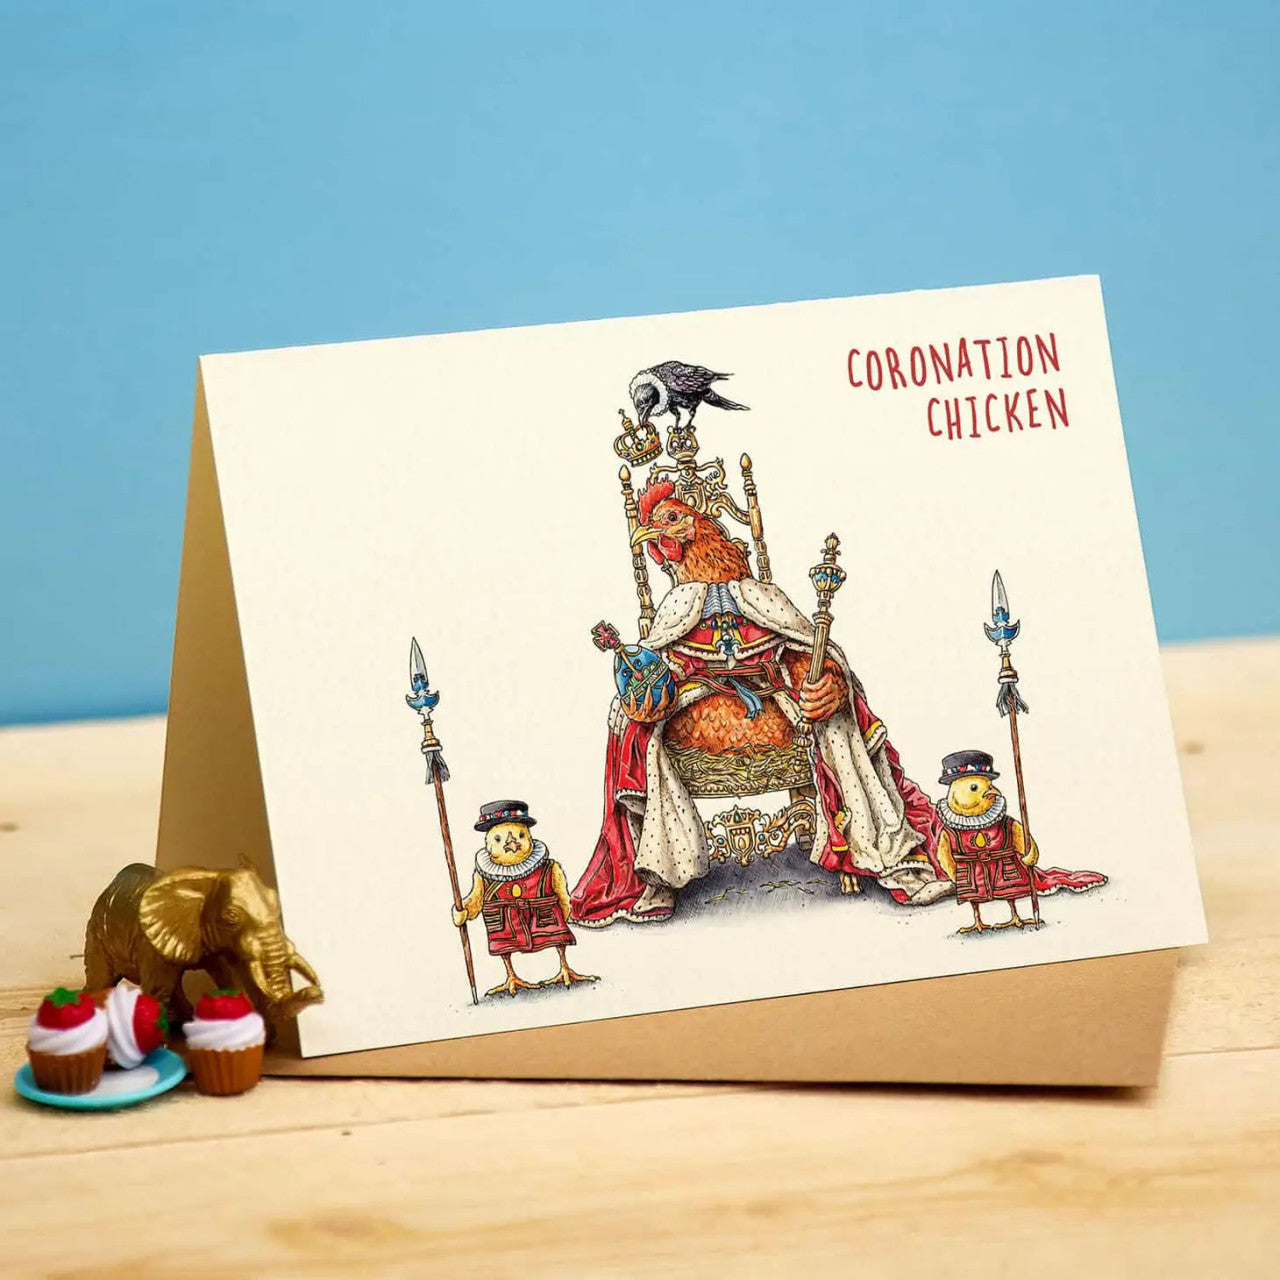 Coronation Chicken Greetings Card by Bewilderbeest.